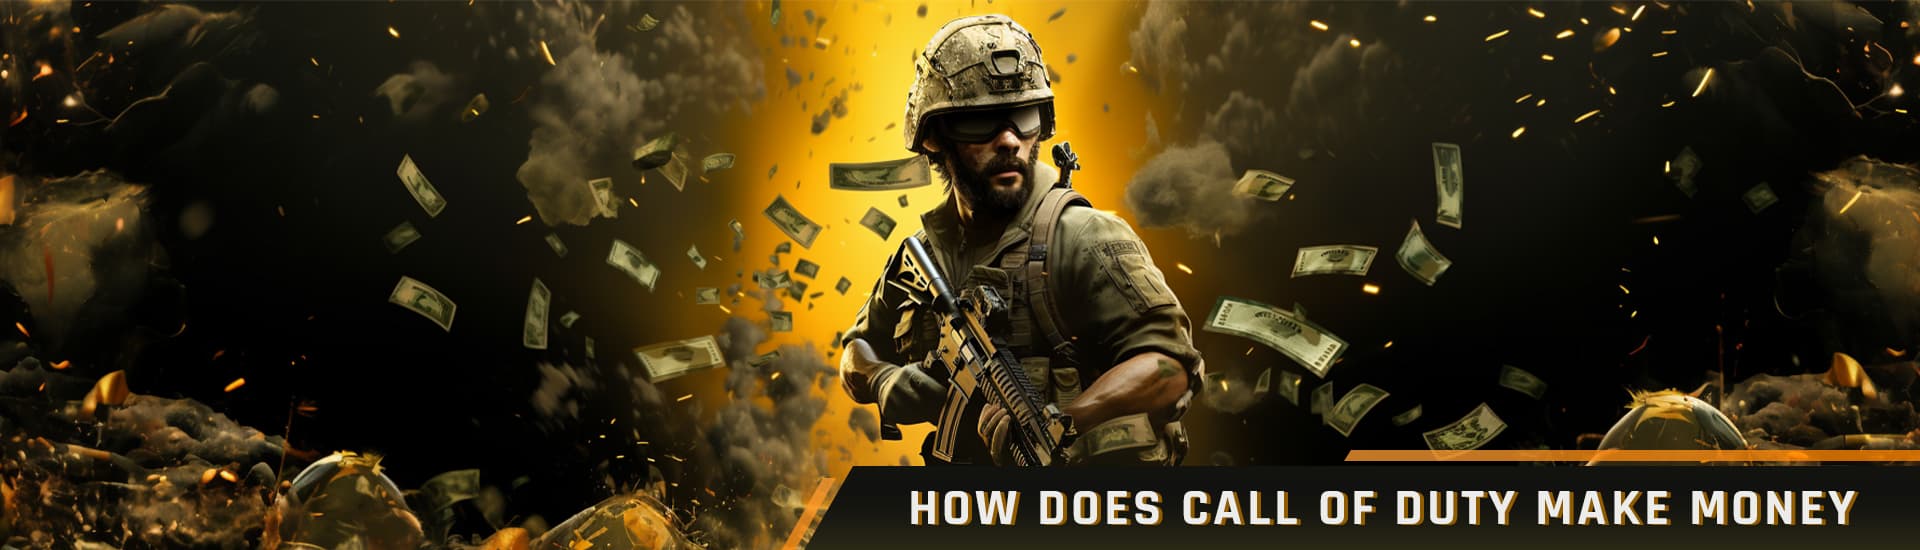 Call of Duty stuck on FB login screen